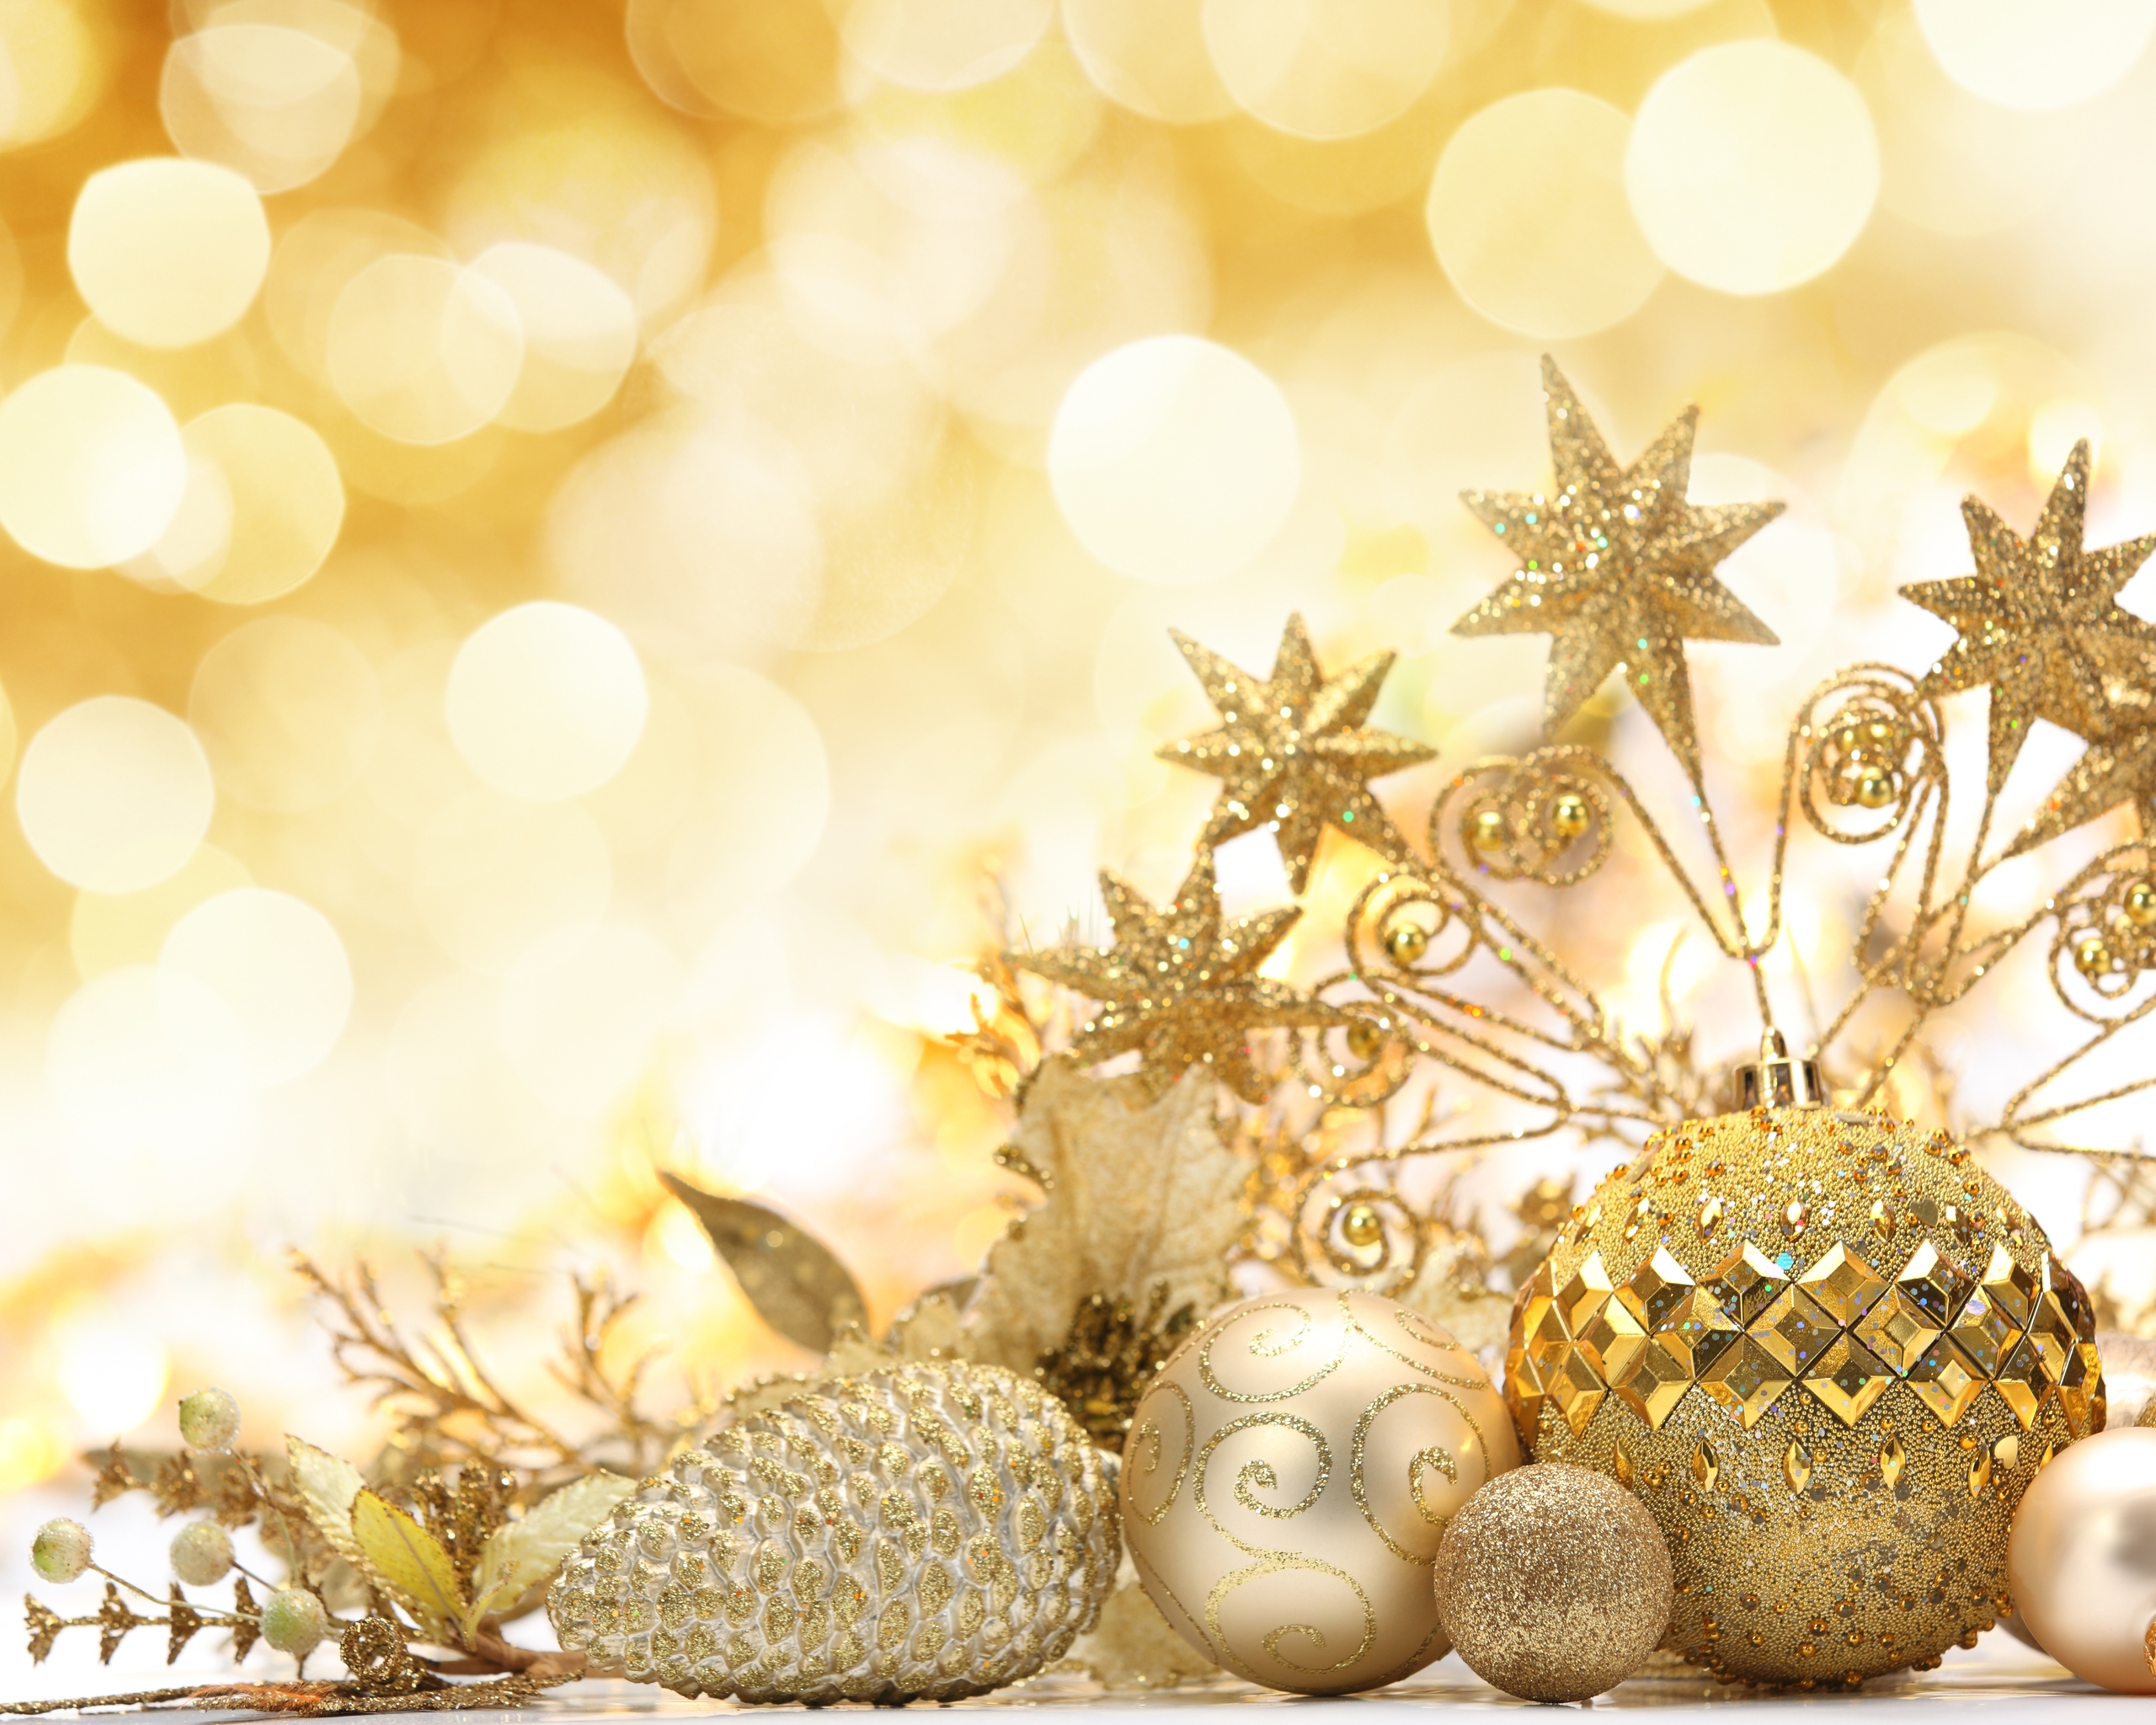 Image: Decoration, glitter, gold, balls, flares, holiday